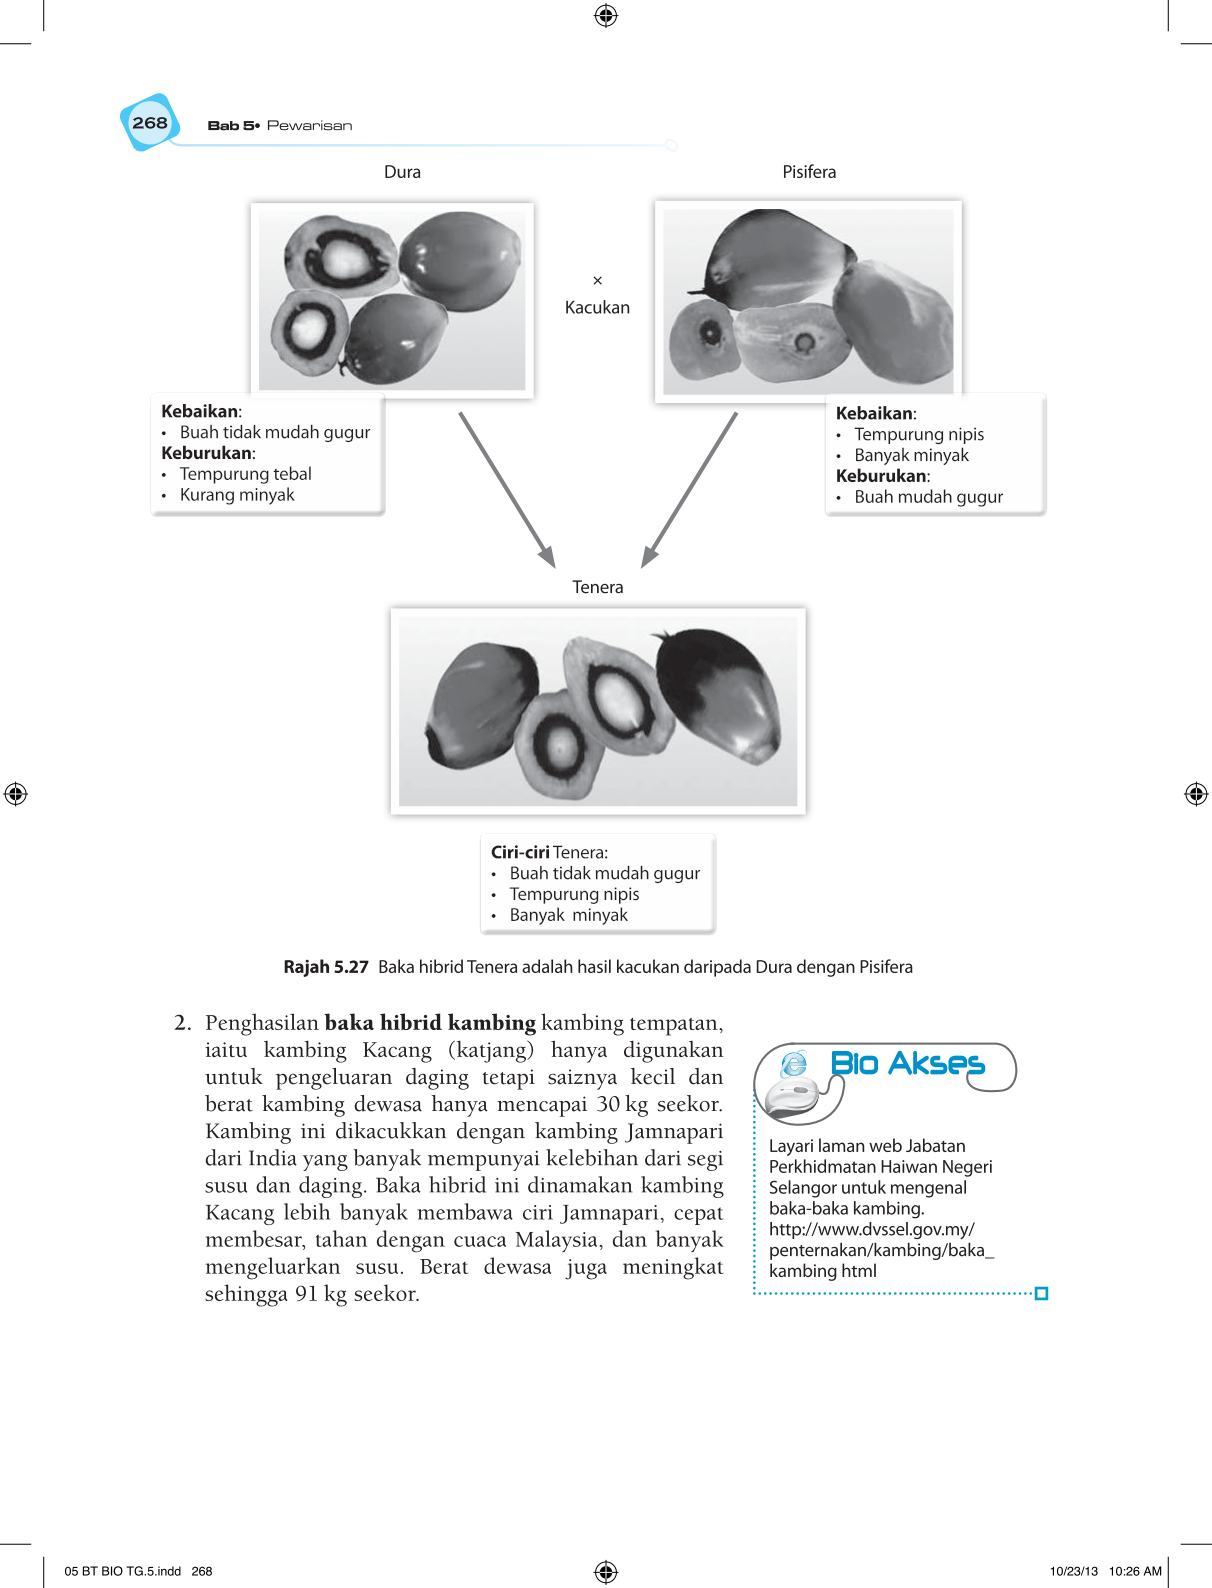 T5 : Biology TB BM Page280